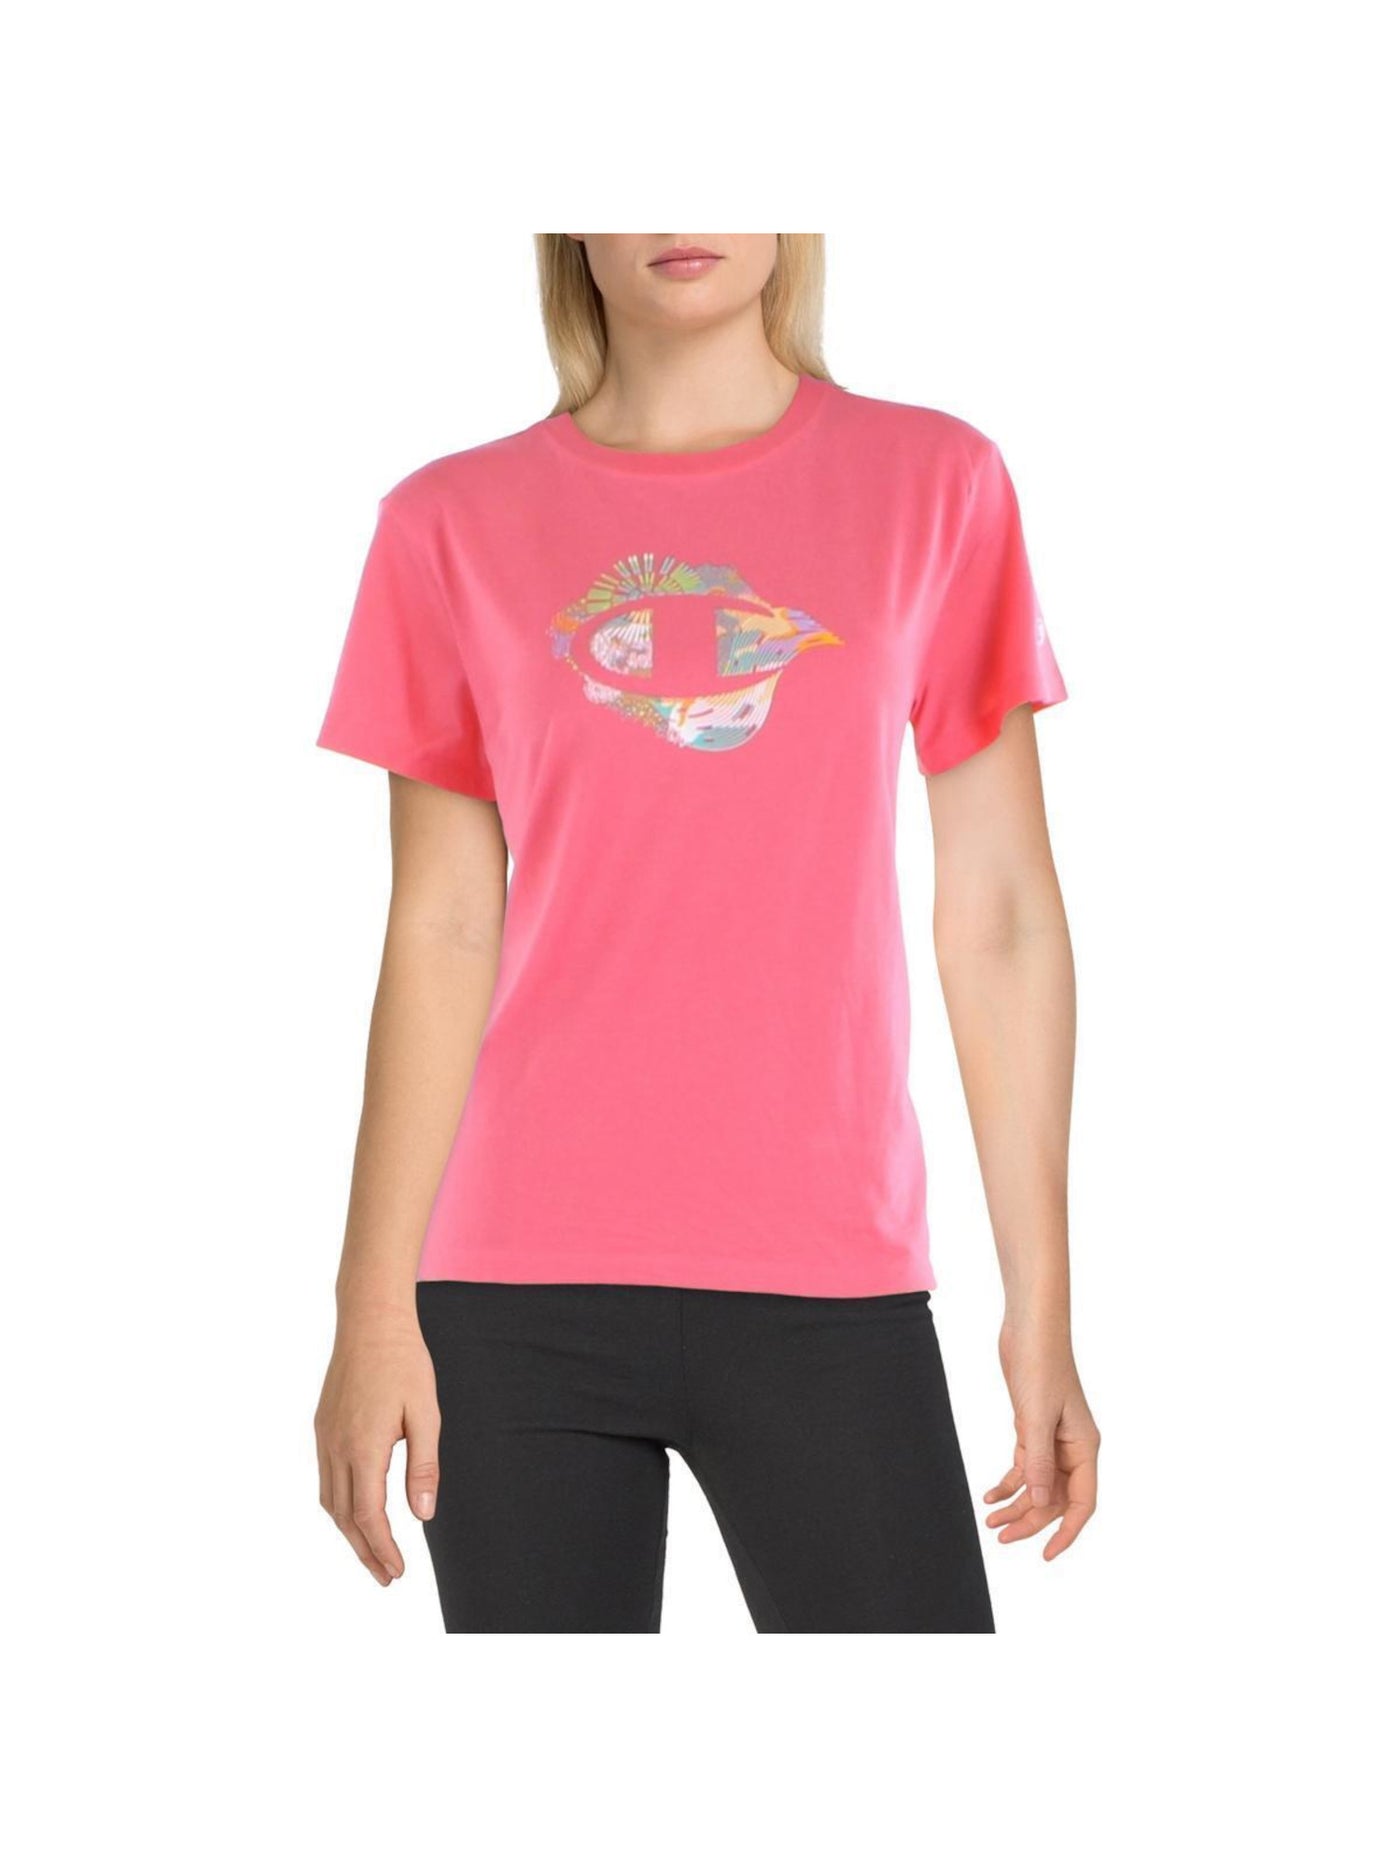 CHAMPION Womens Pink Graphic Short Sleeve Crew Neck T-Shirt S